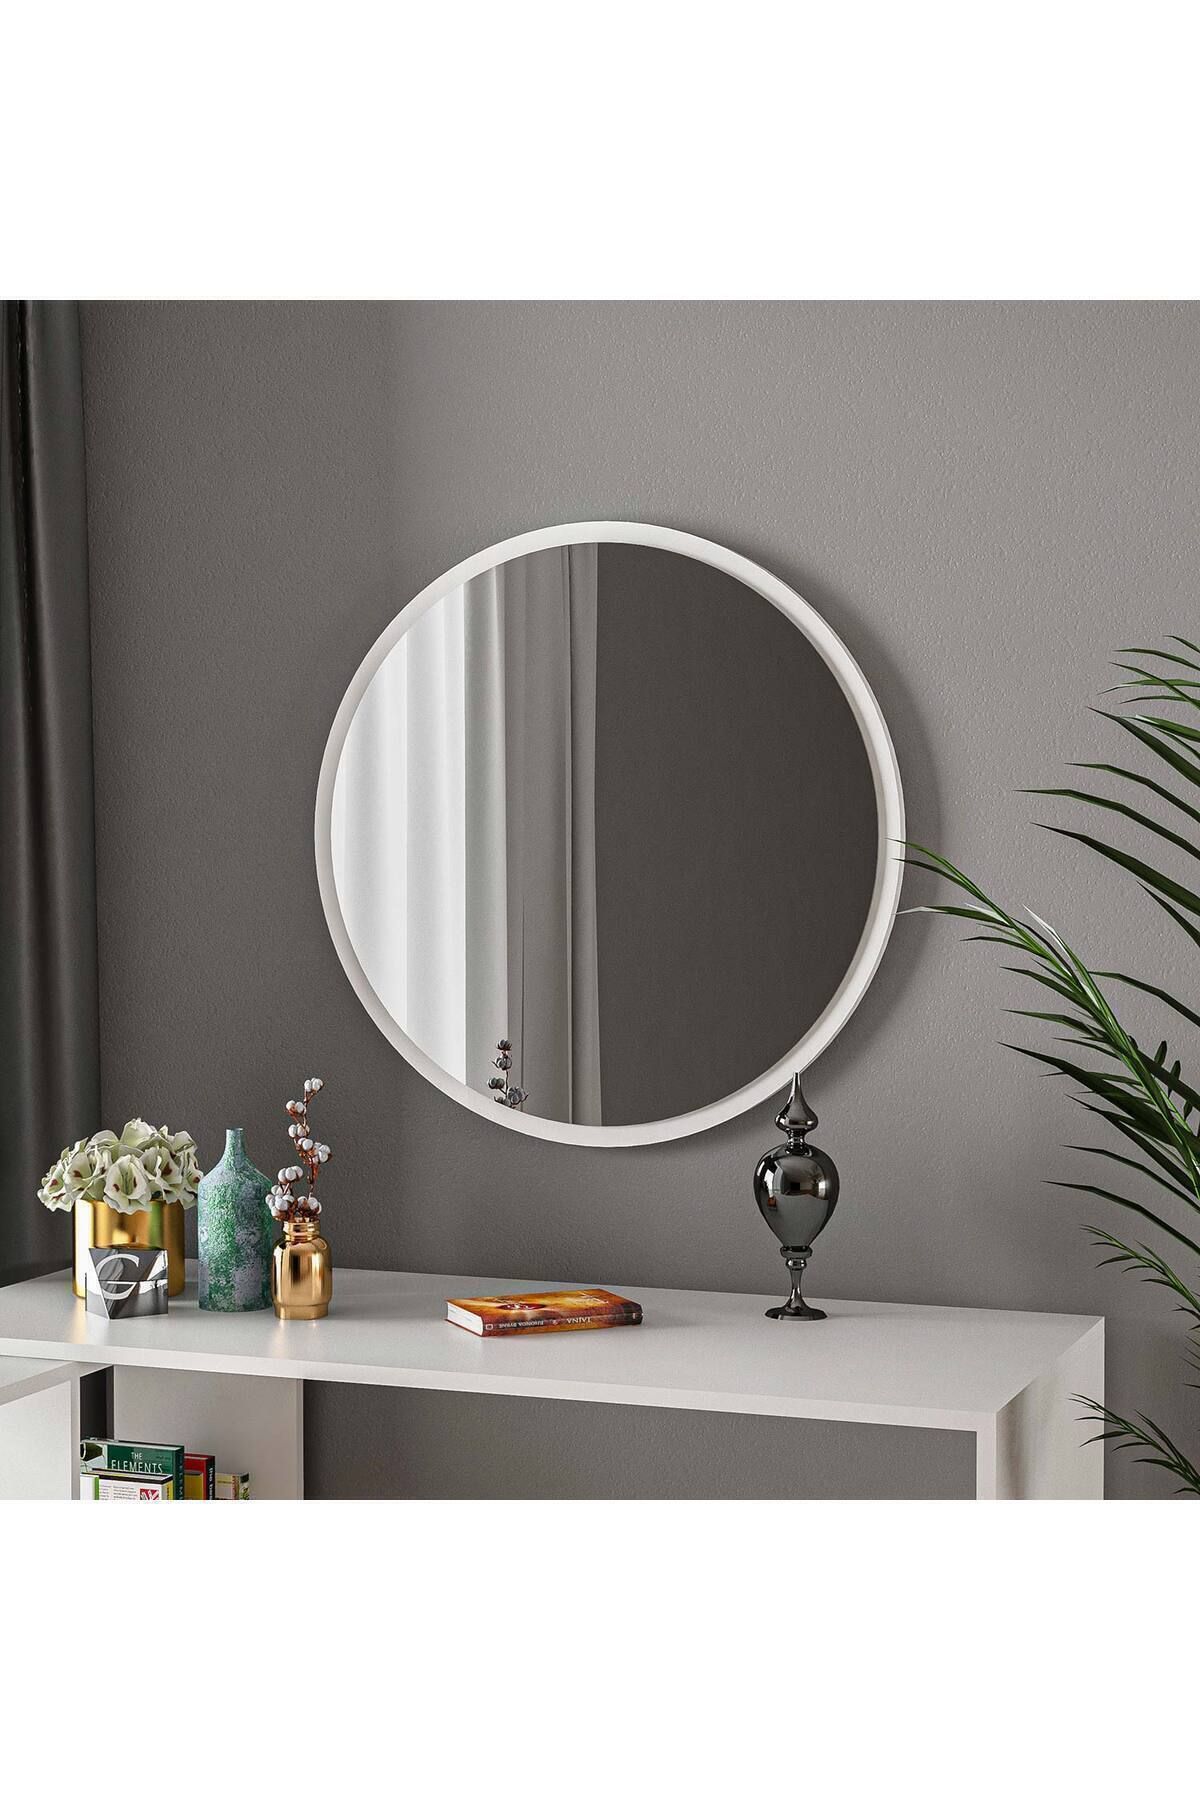 Bofigo 60 Cm Porto Banyo Aynası Dekoratif Lavabo Aynası Yuvarlak Ayna Beyaz